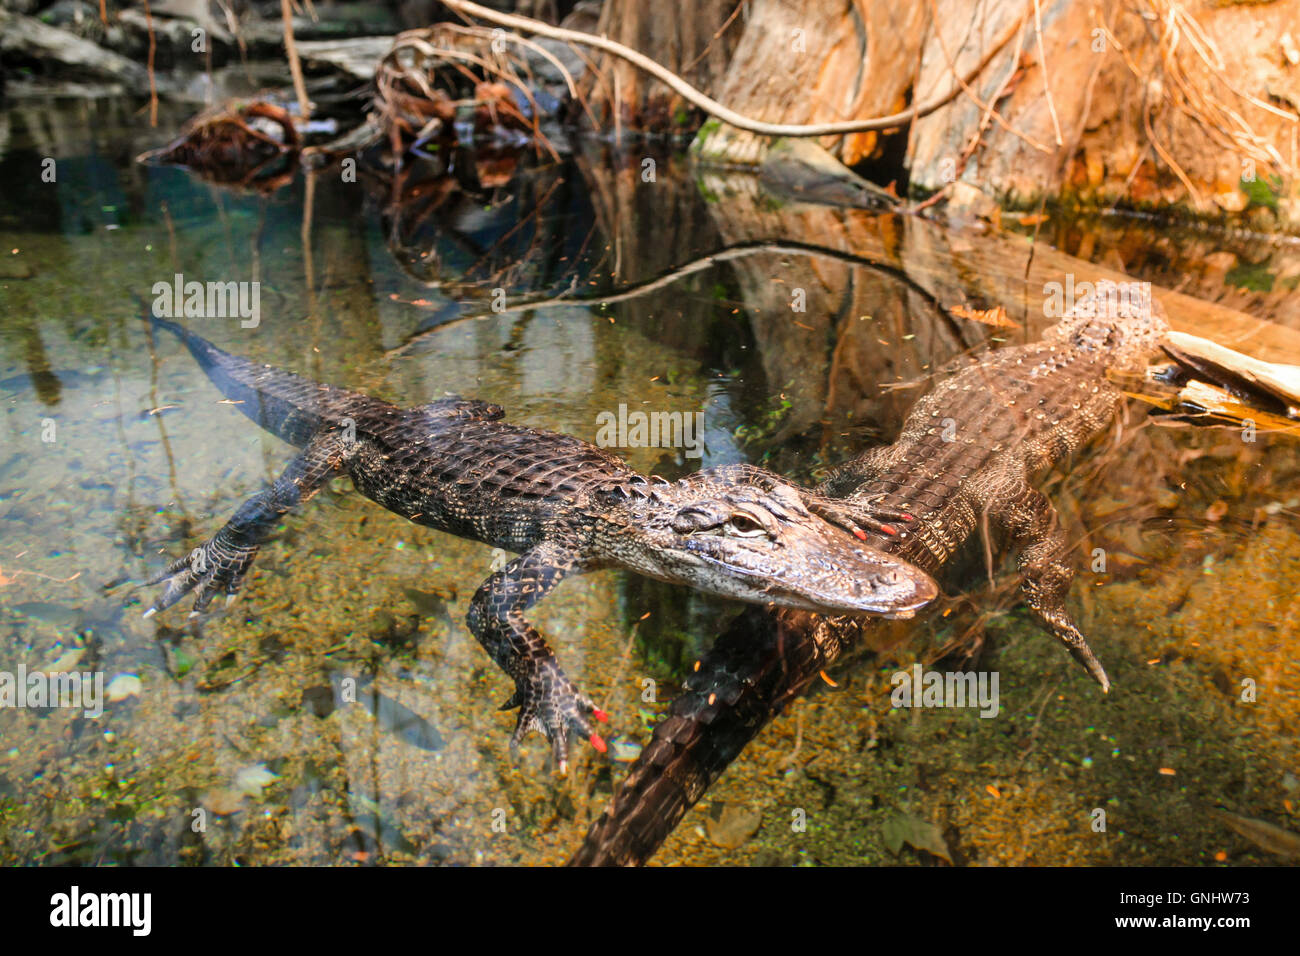 Alligators In The Louisiana Swamps Diorama At The Tennessee Aquarium In